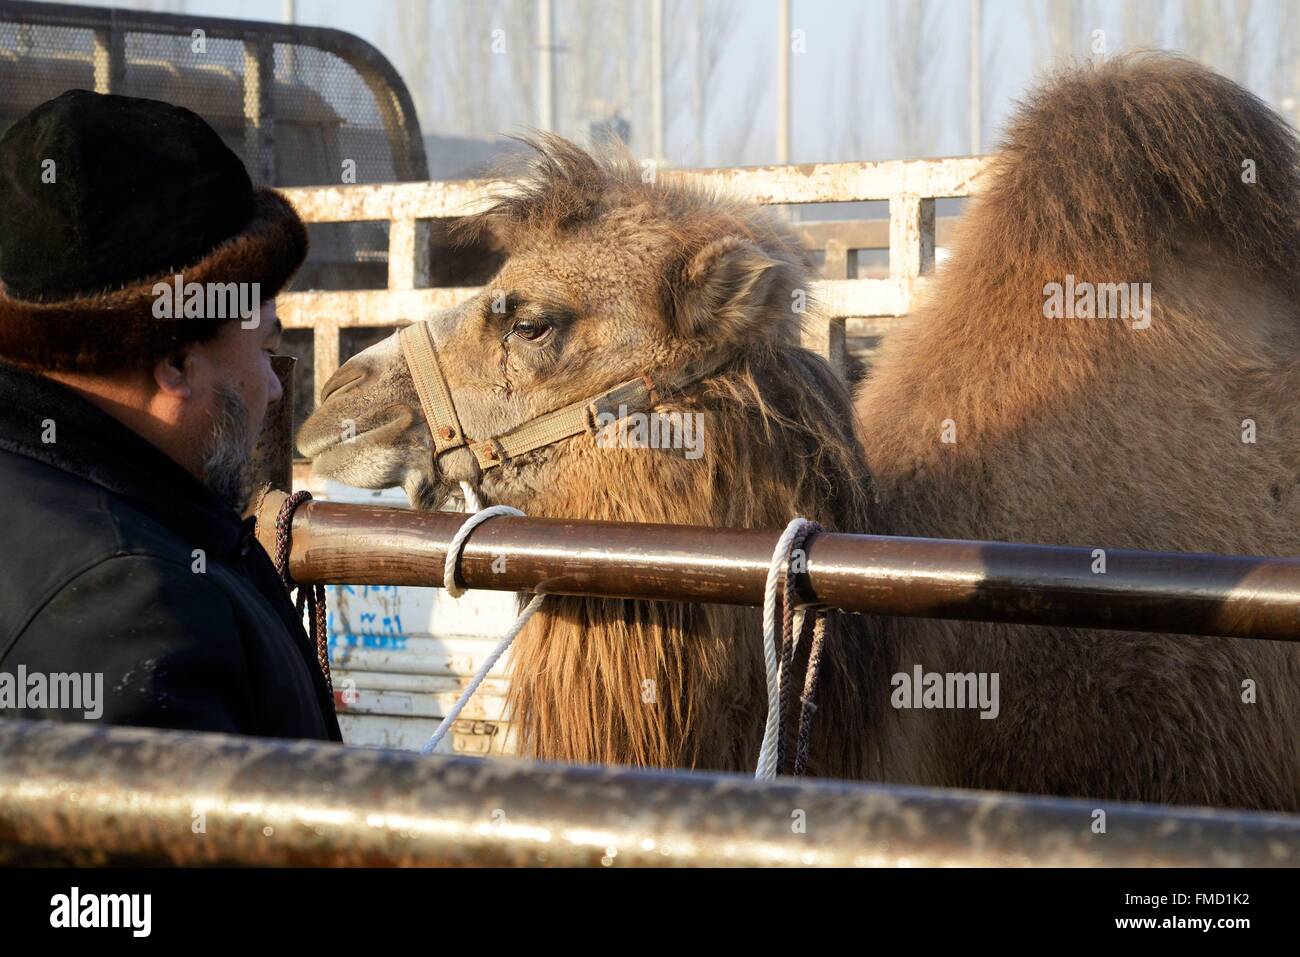 Cina, Xinjiang Uyghur Regione autonoma, Kashgar (Kashi), domenica Mercato del Bestiame, Bactrian camel Foto Stock